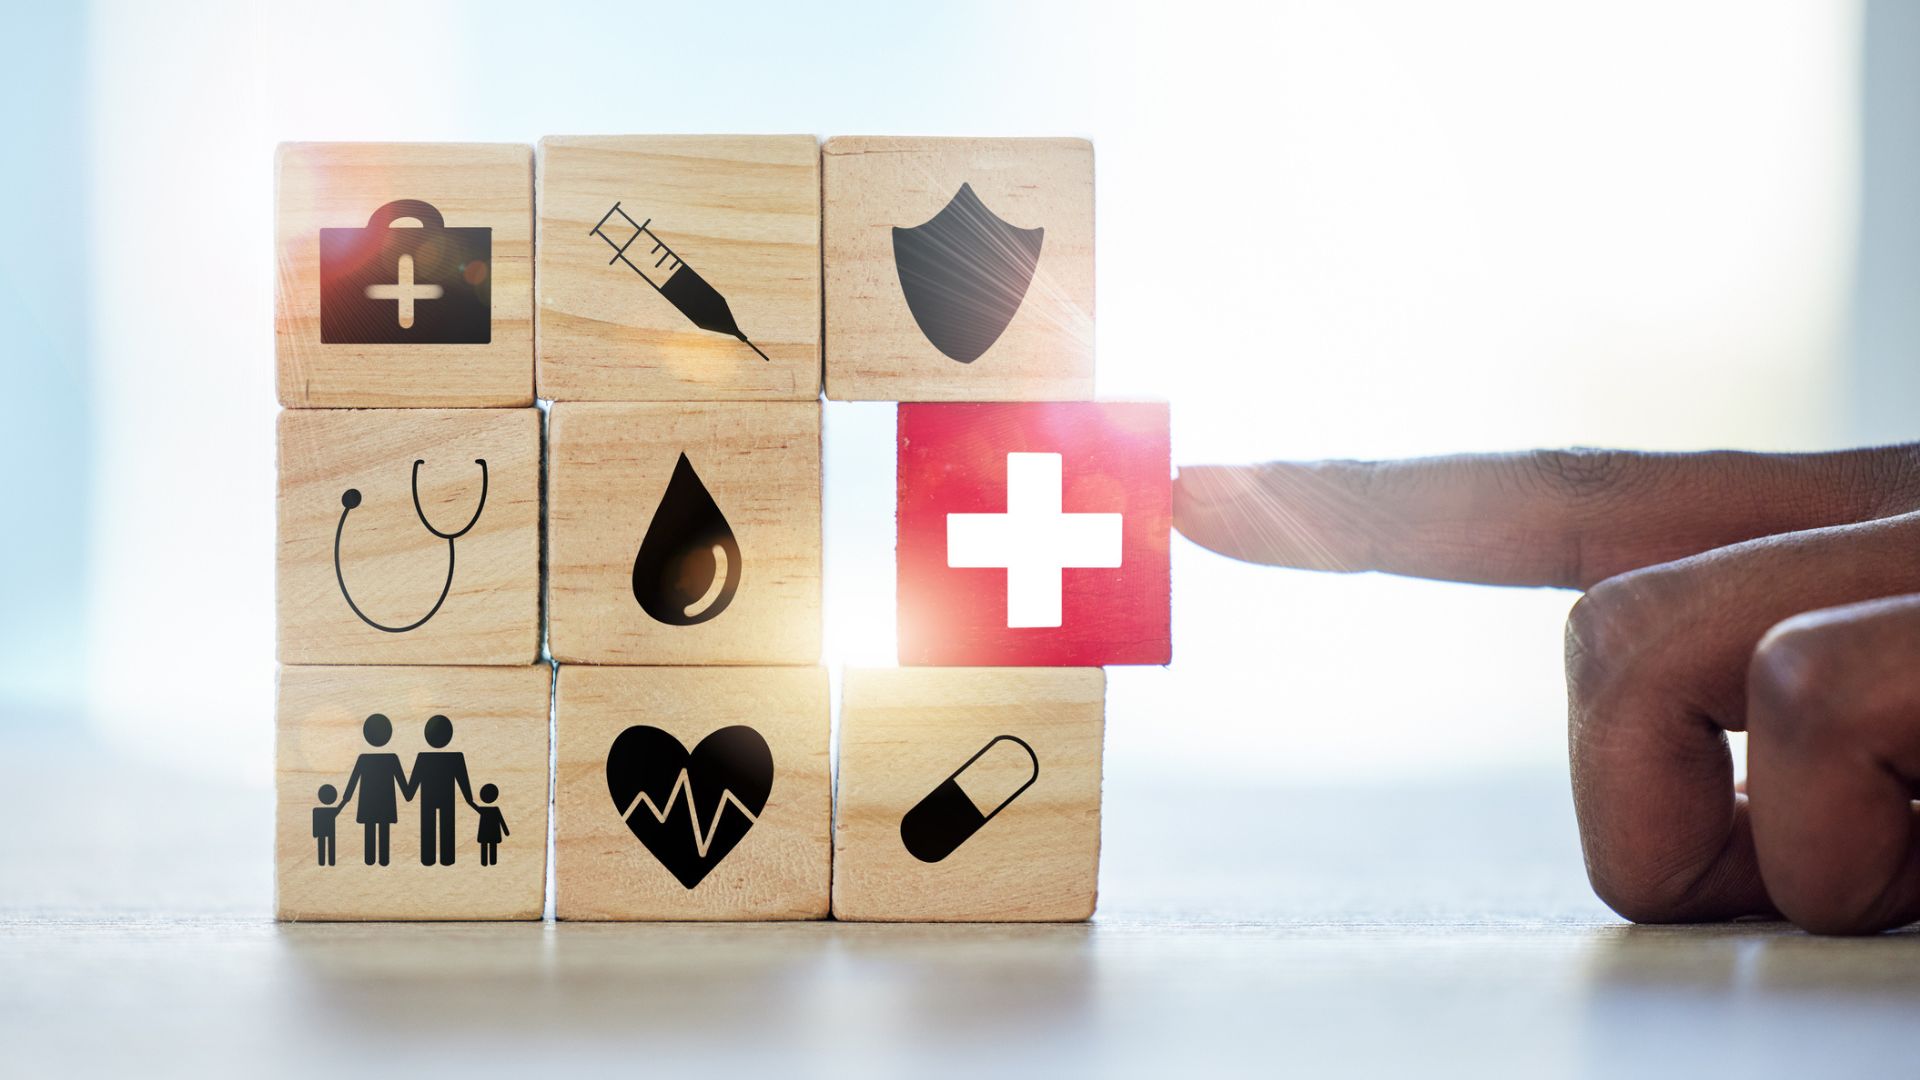 Medical symbols on wooden blocks